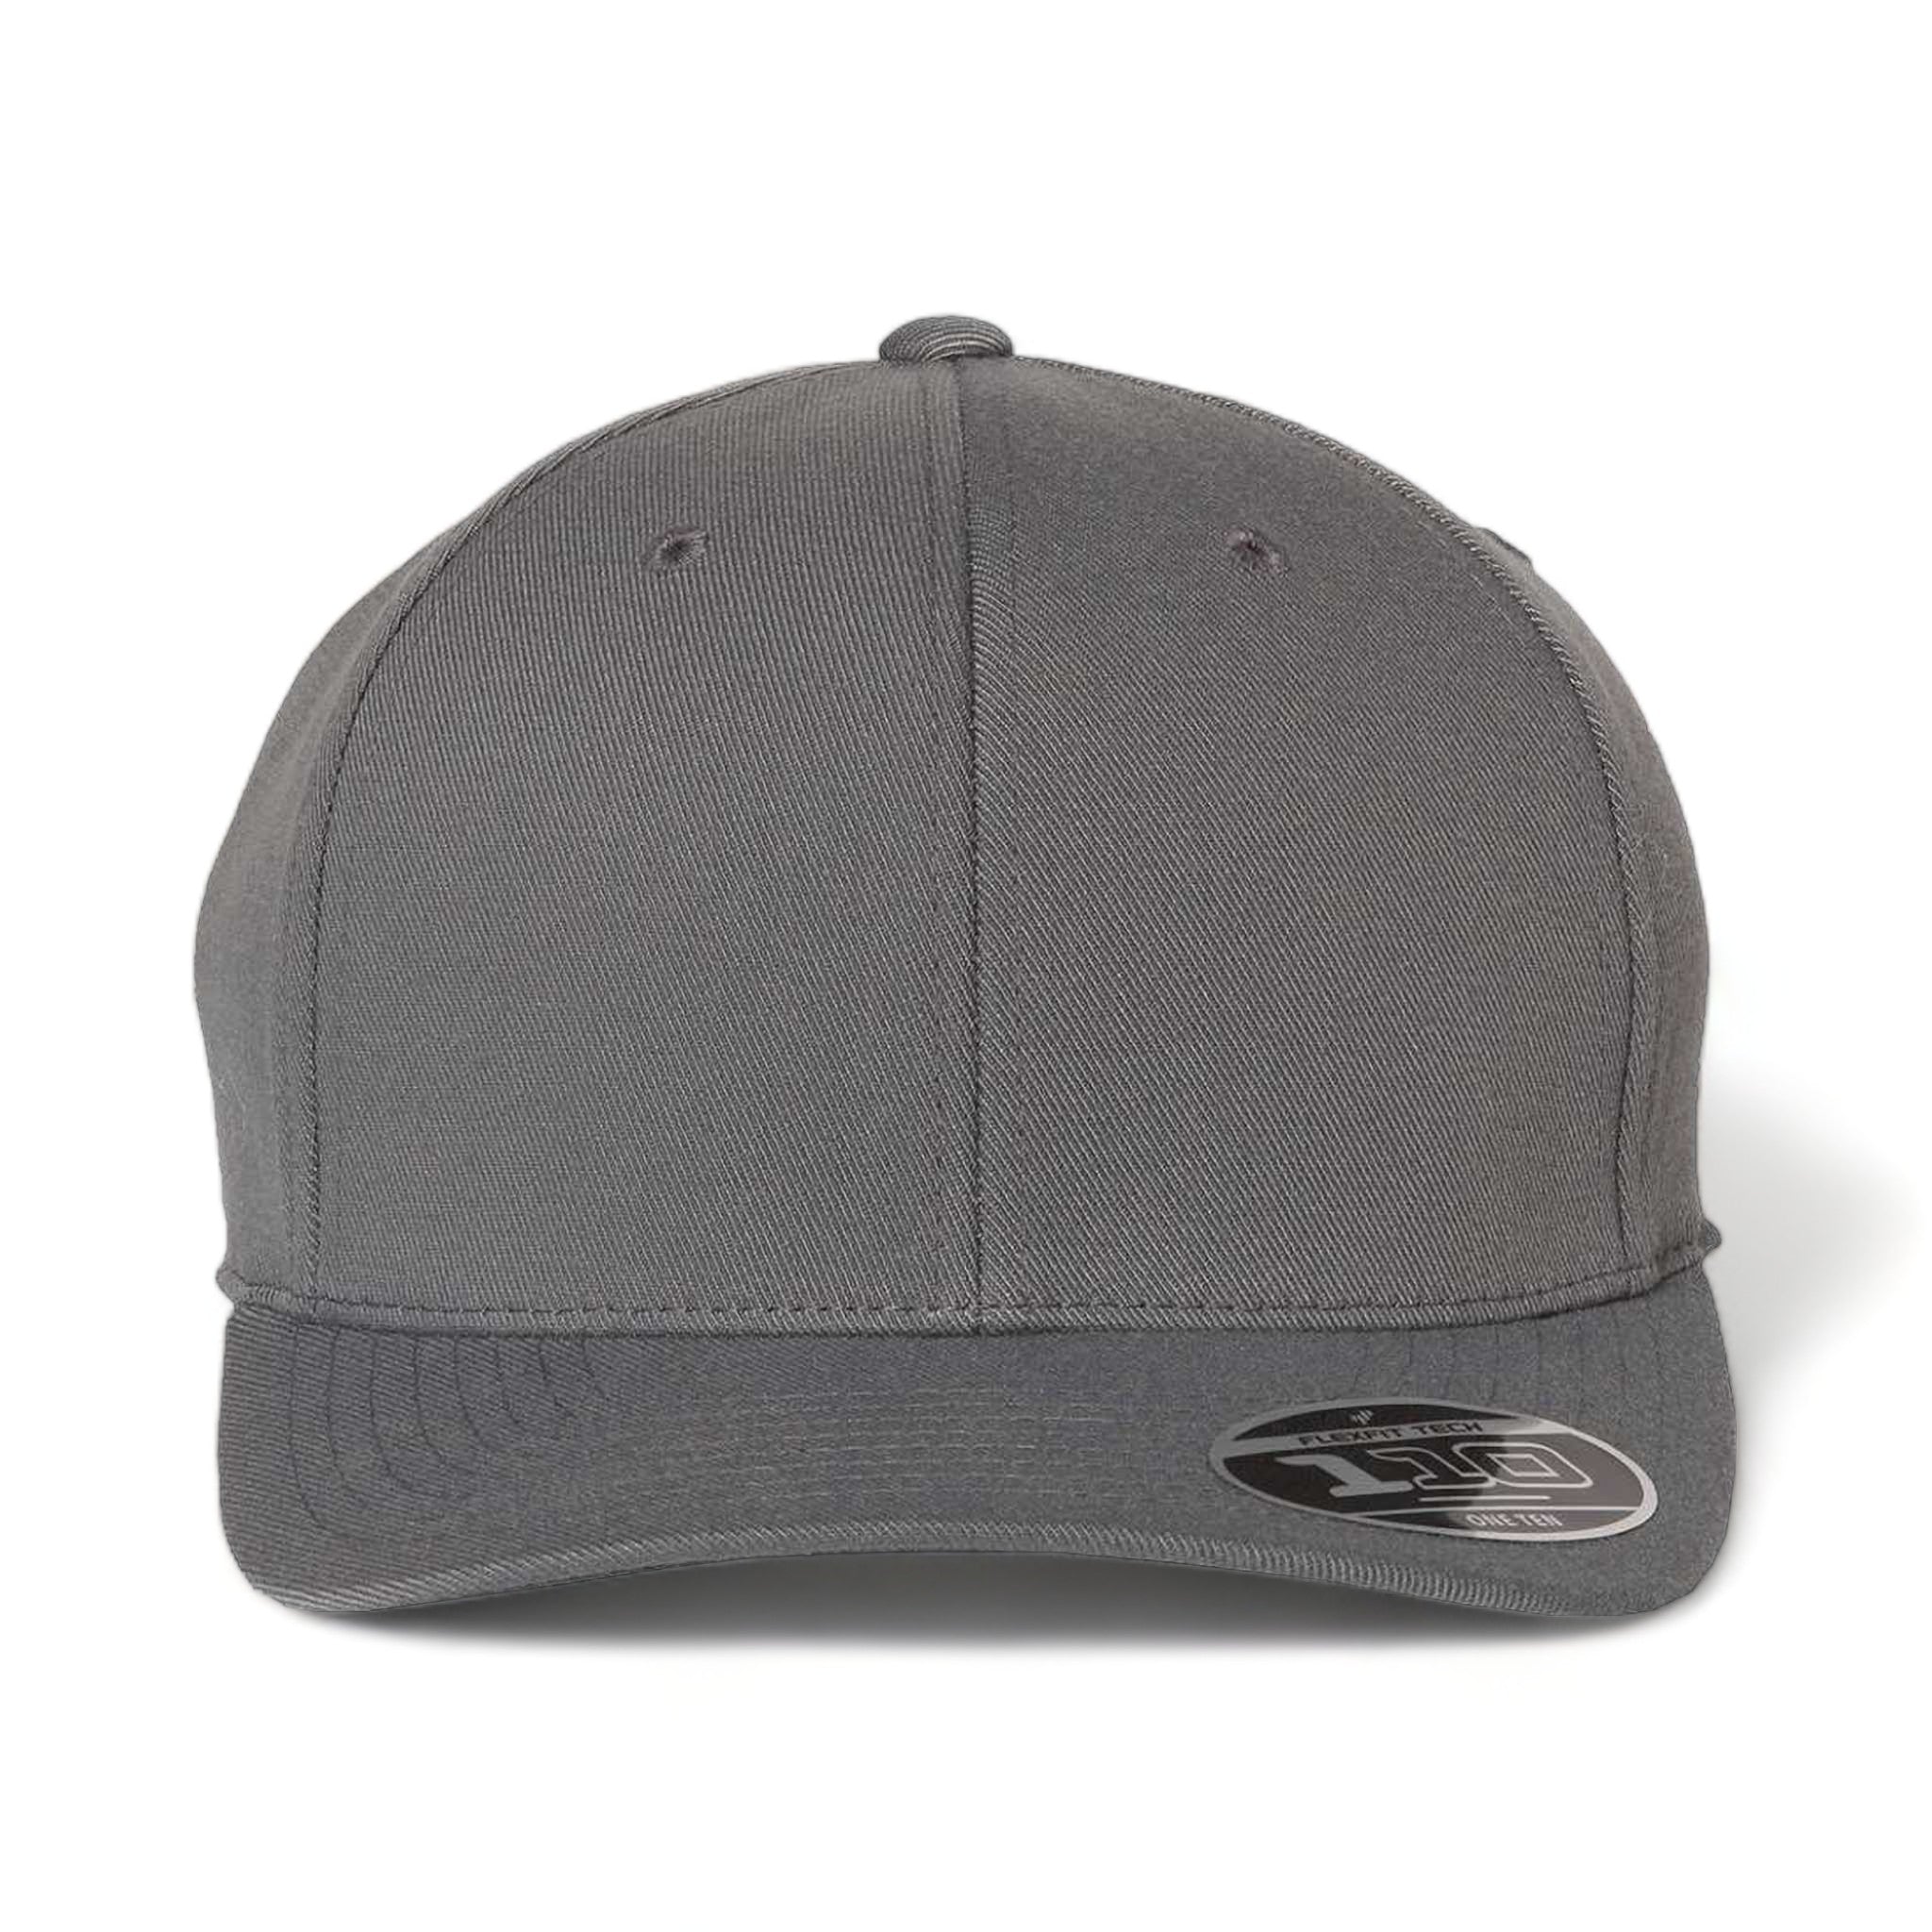 Front view of Flexfit 110C custom hat in grey